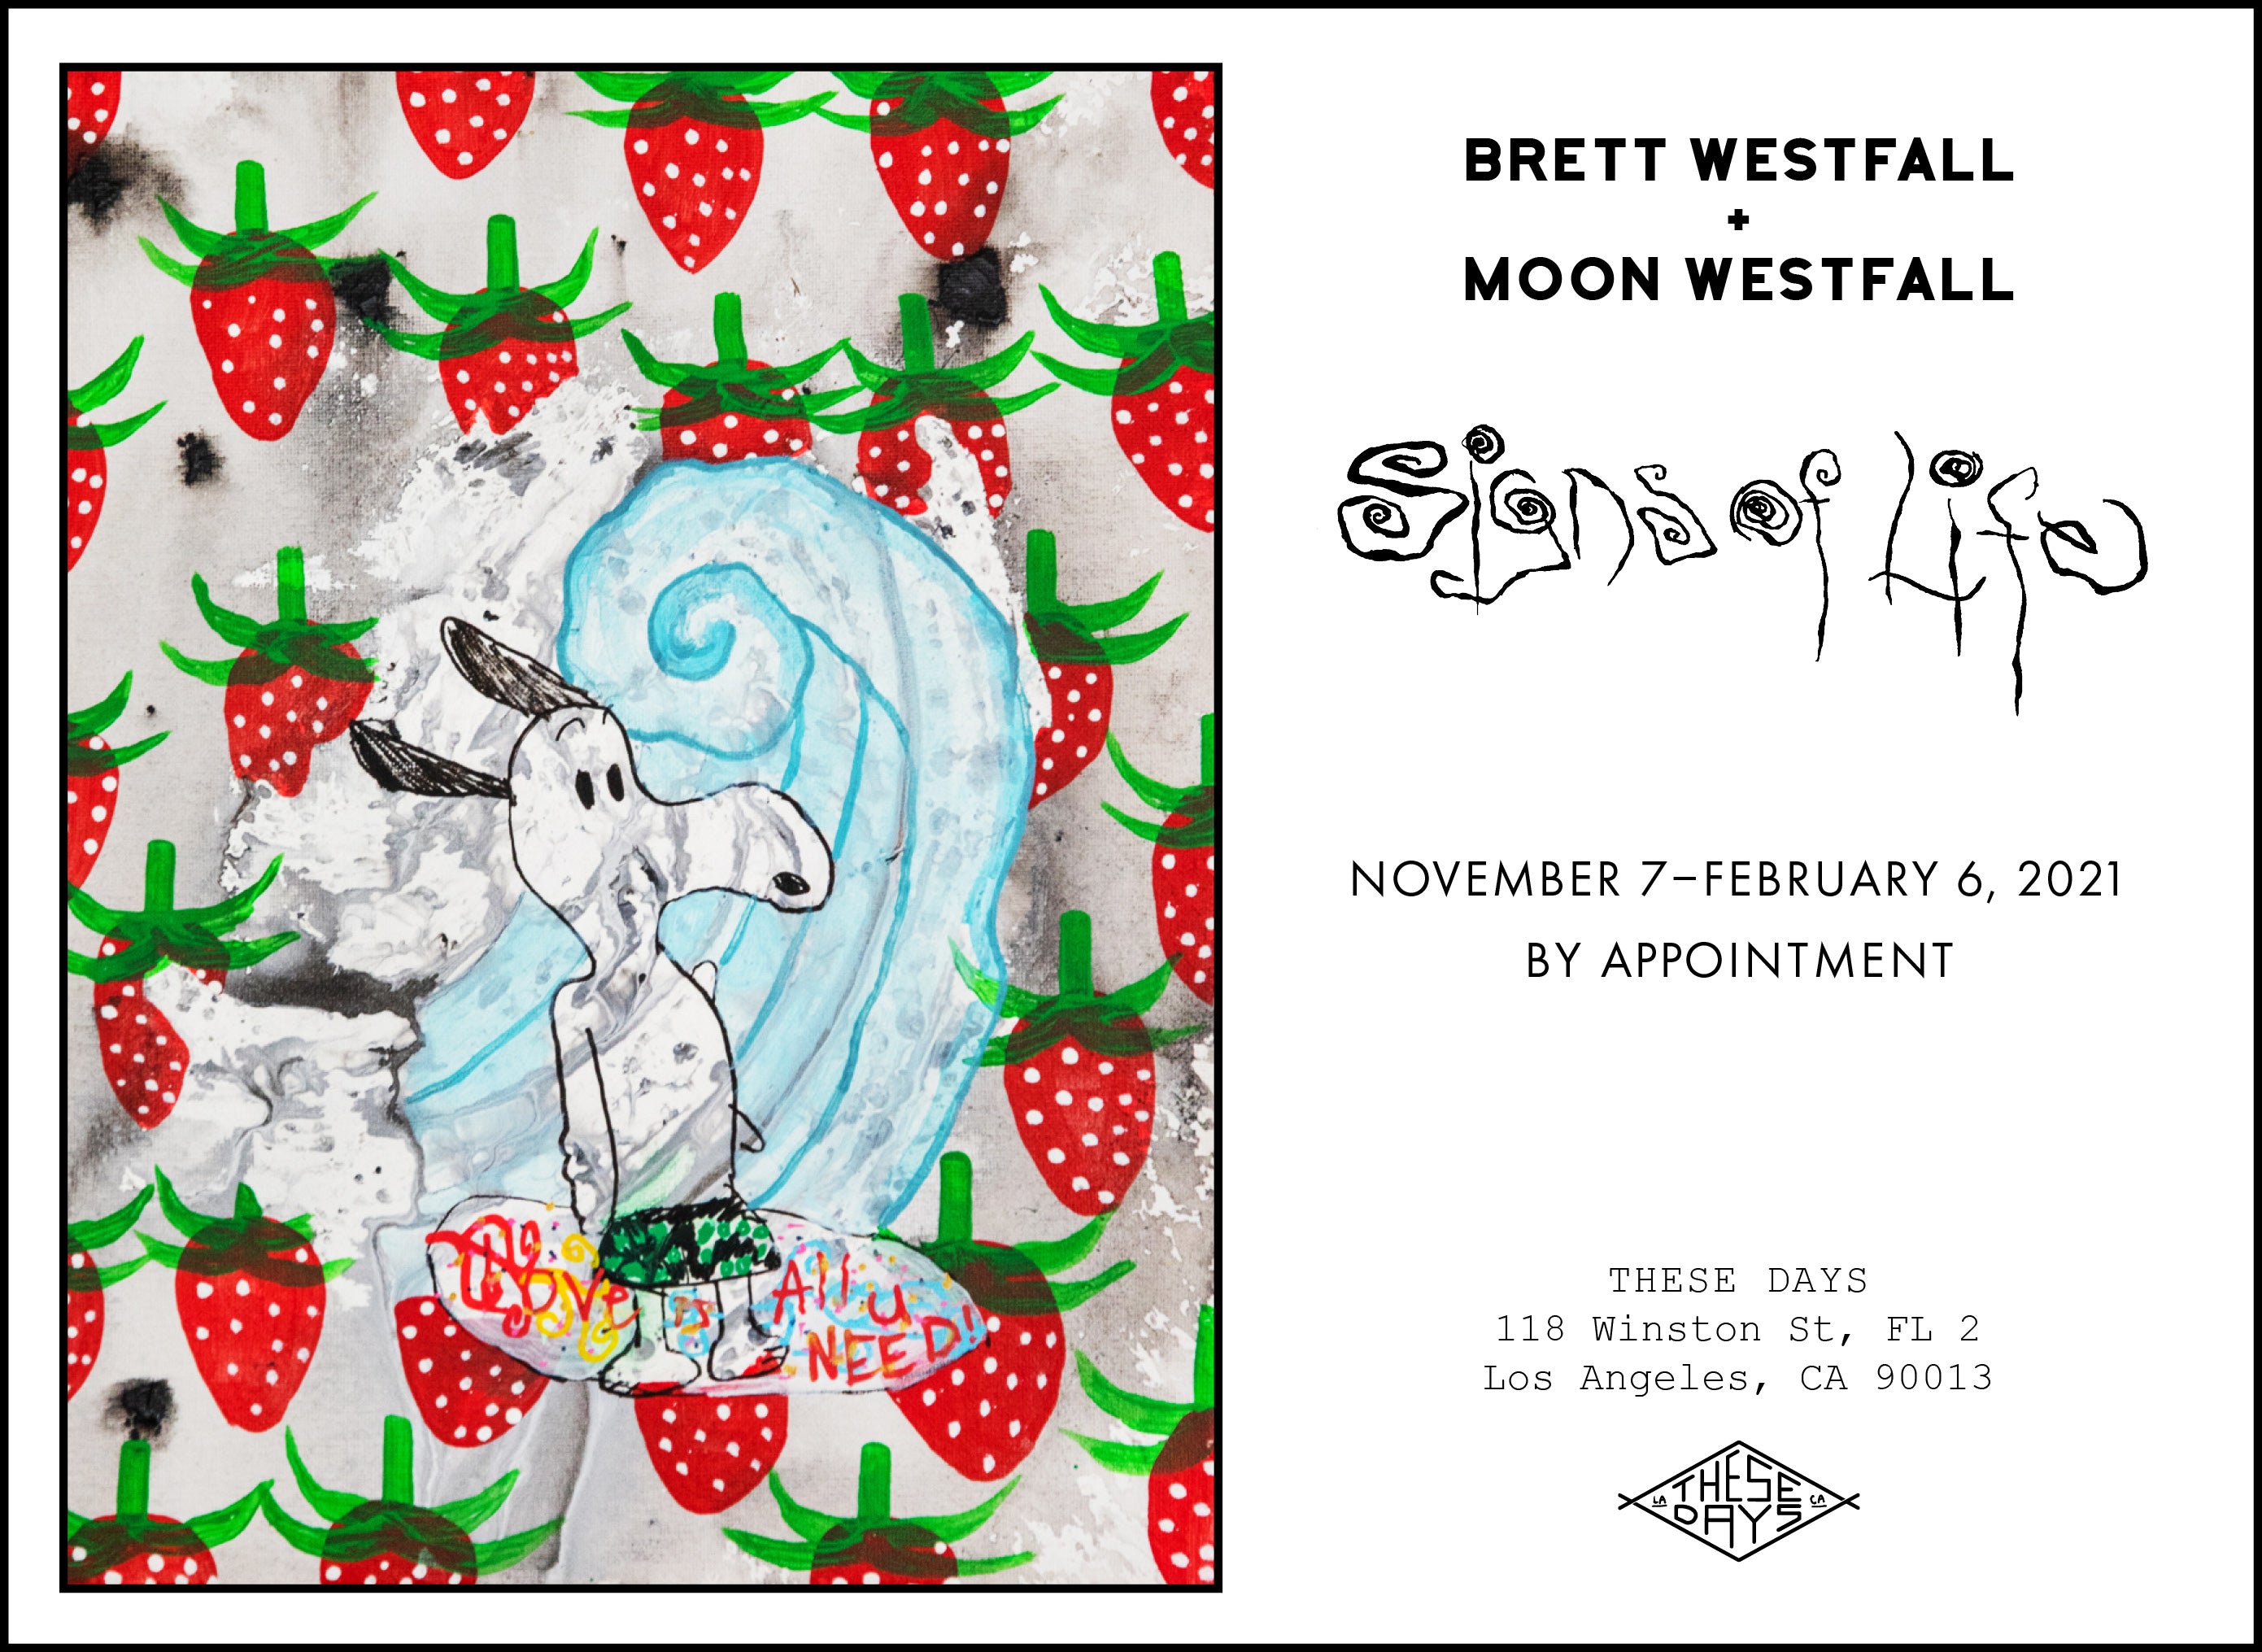 SIGNS OF LIFE | Brett Westfall and Moon Westfall